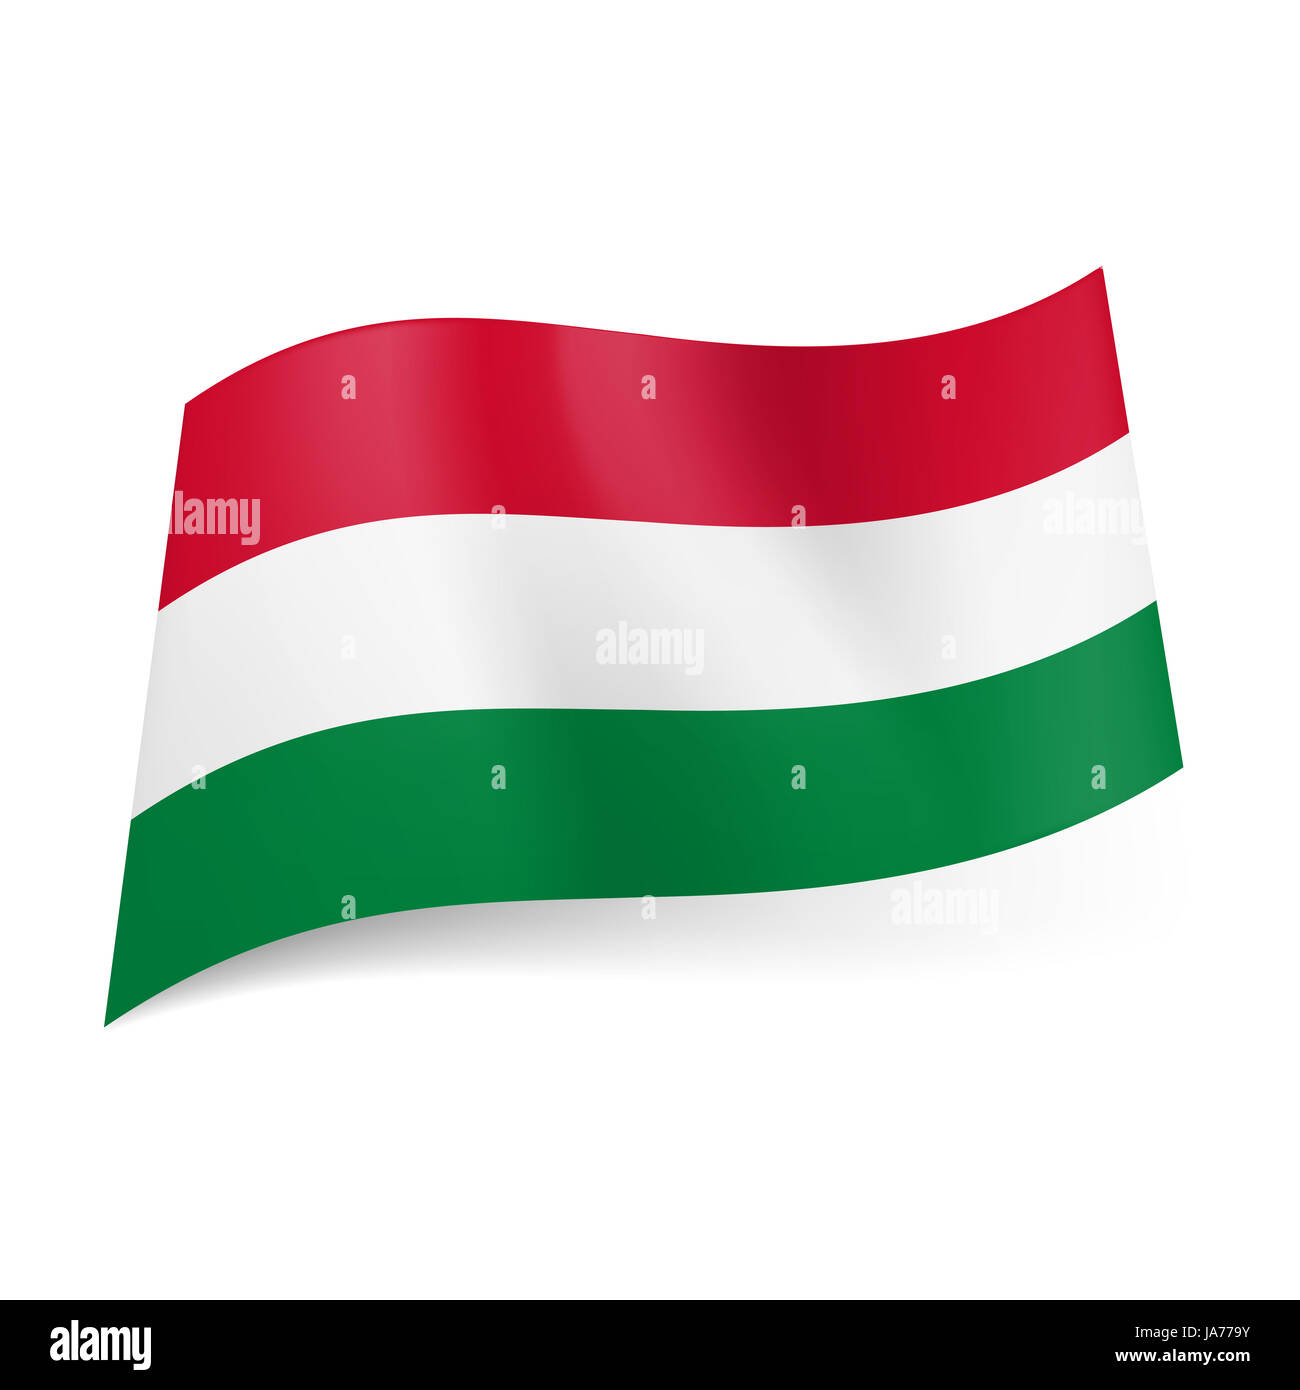 https://c8.alamy.com/comp/JA779Y/national-flag-of-hungary-red-white-and-green-horizontal-stripes-JA779Y.jpg